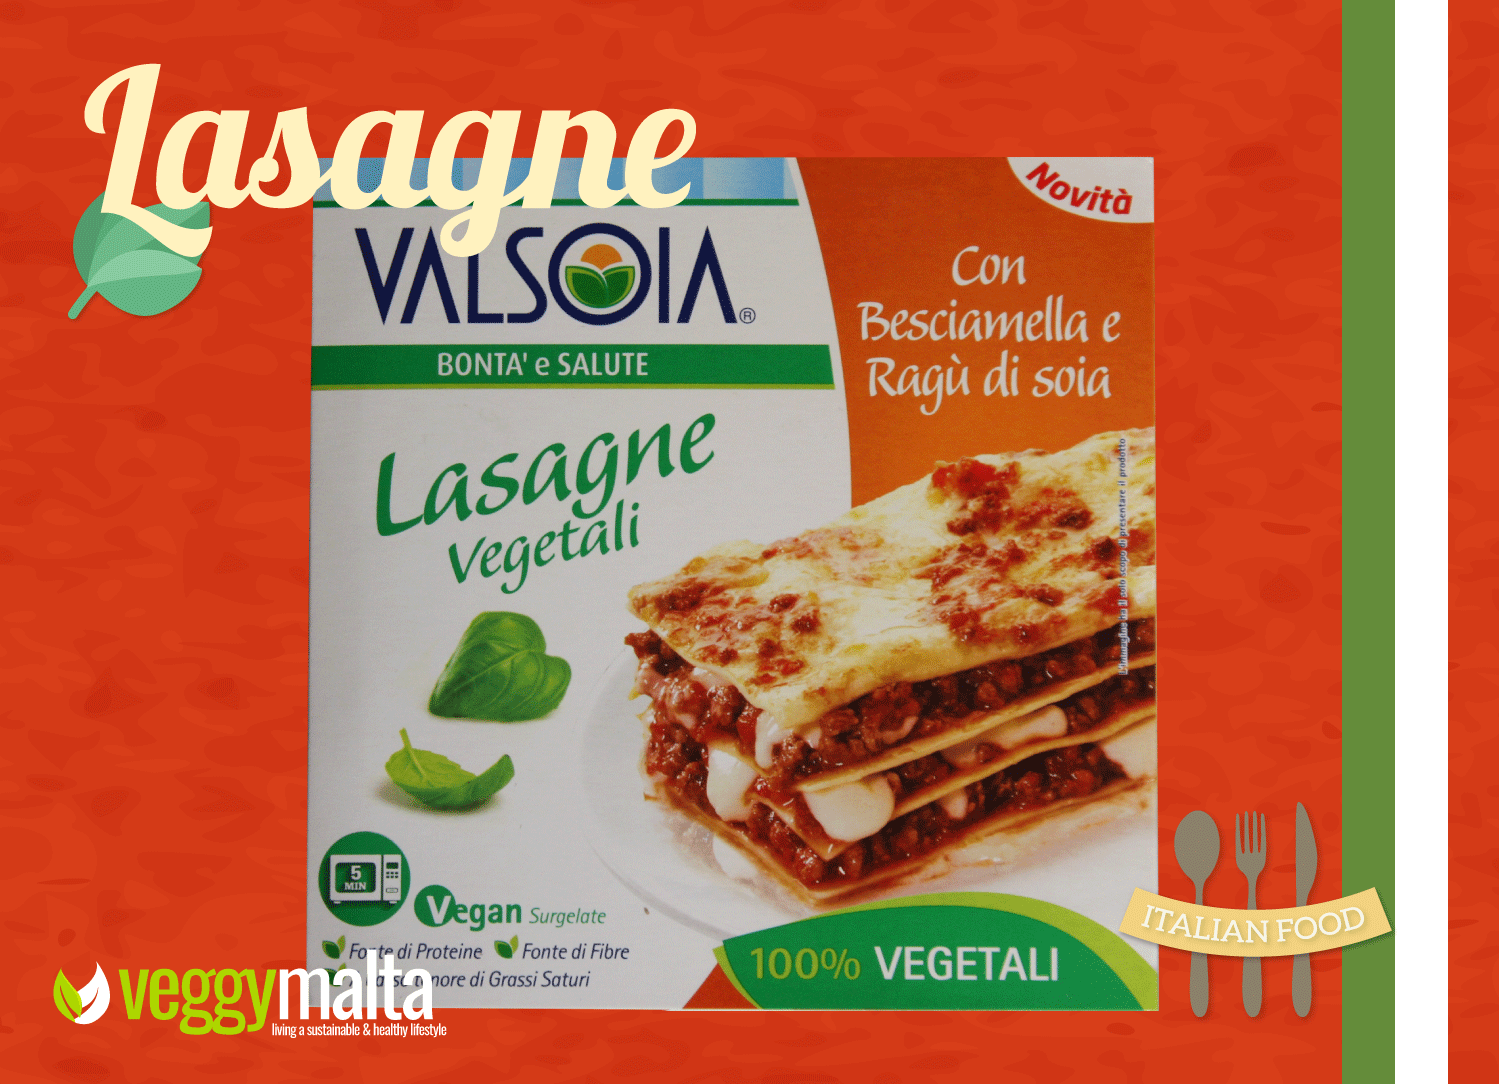 valsoia-lasagne-vegetale-box-main